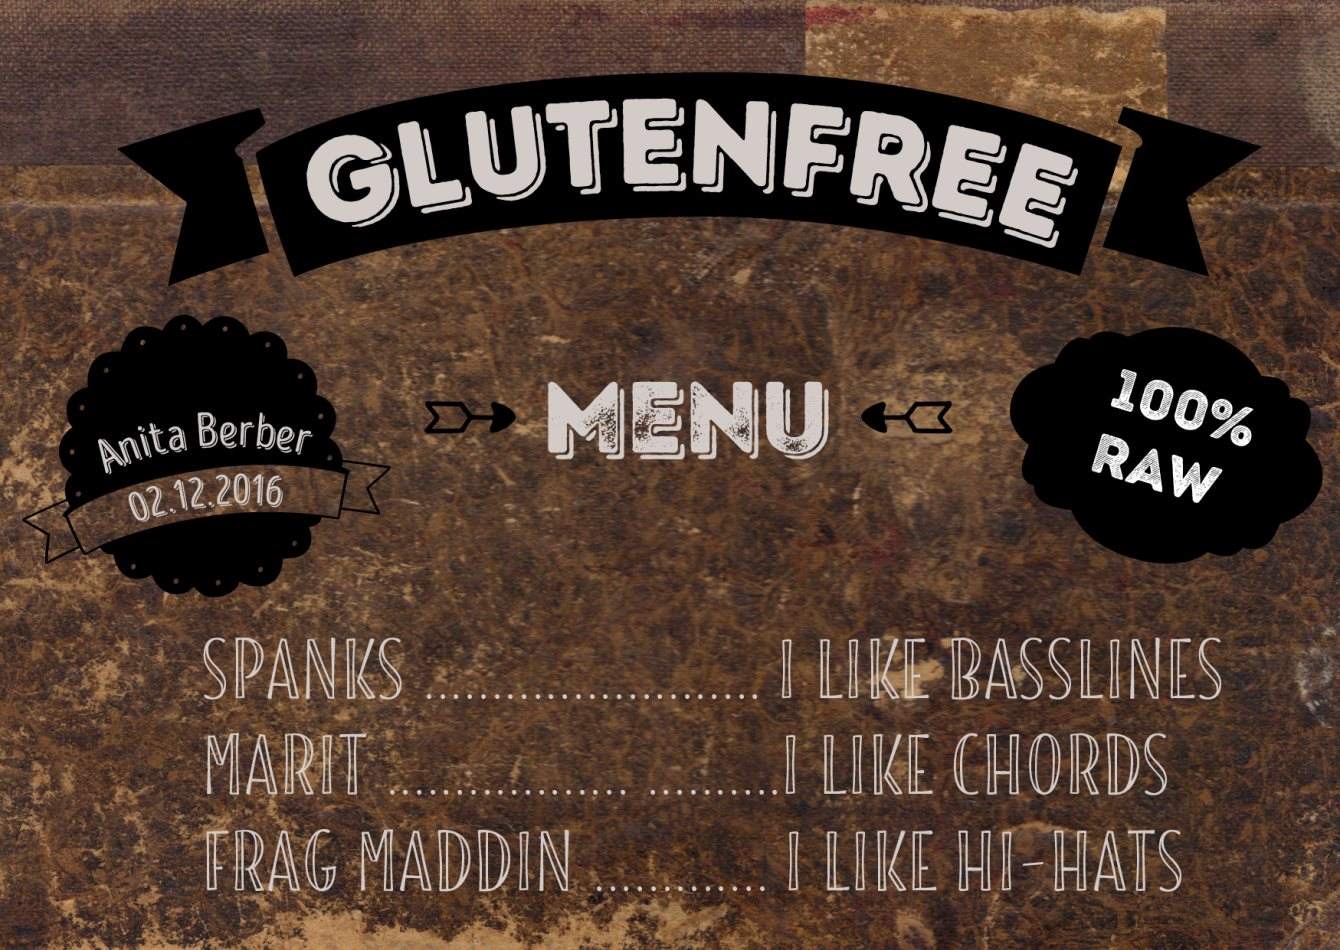 Glutenfree with Spanks, Marit & Frag Maddin - フライヤー表